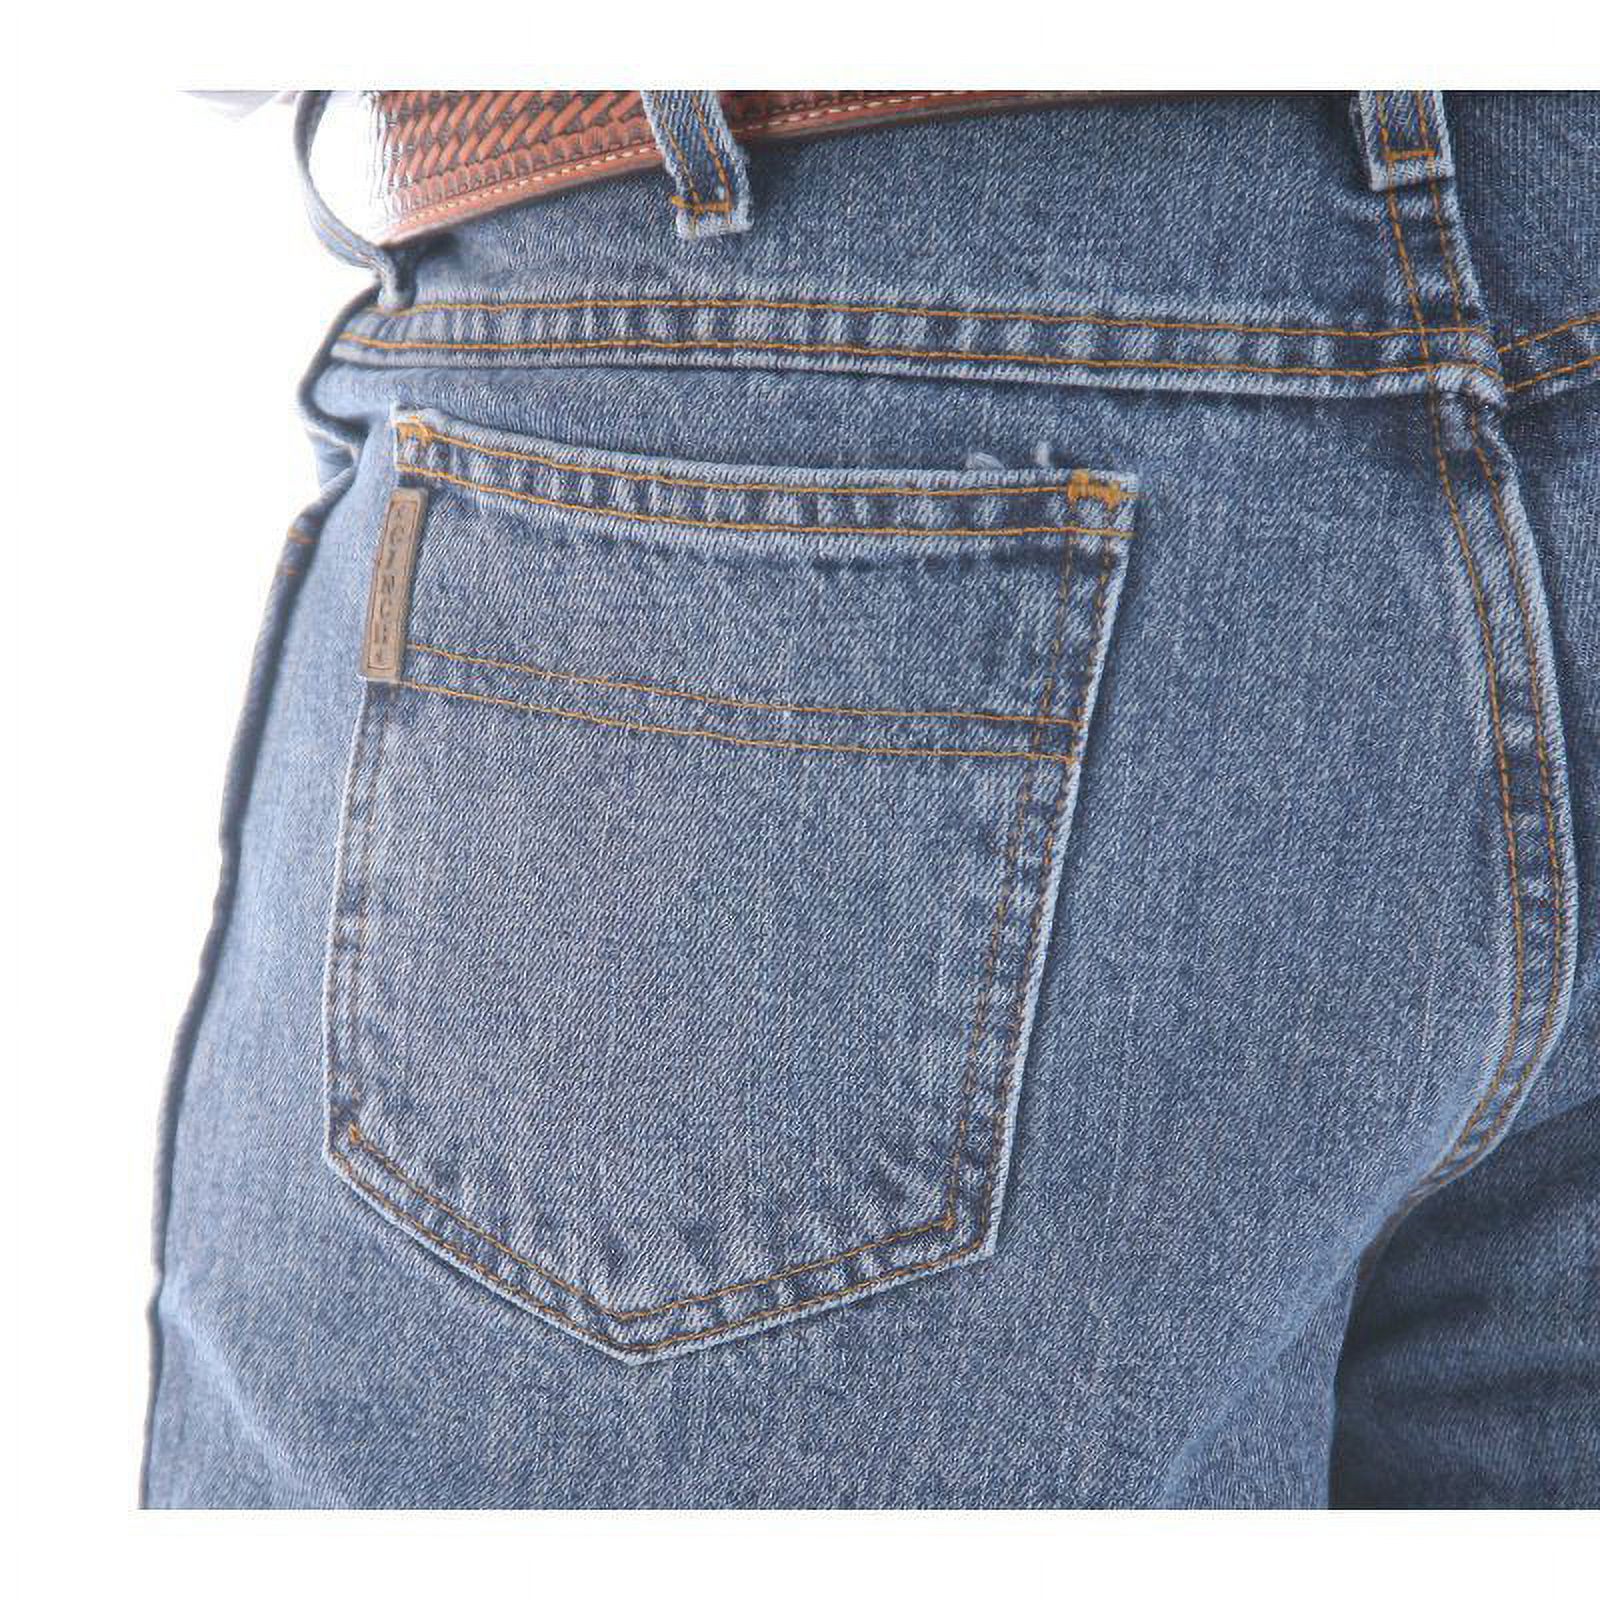 Cinch Men's Jeans  Original Fit Green Label Midstone 33W x 38L  US - image 3 of 4